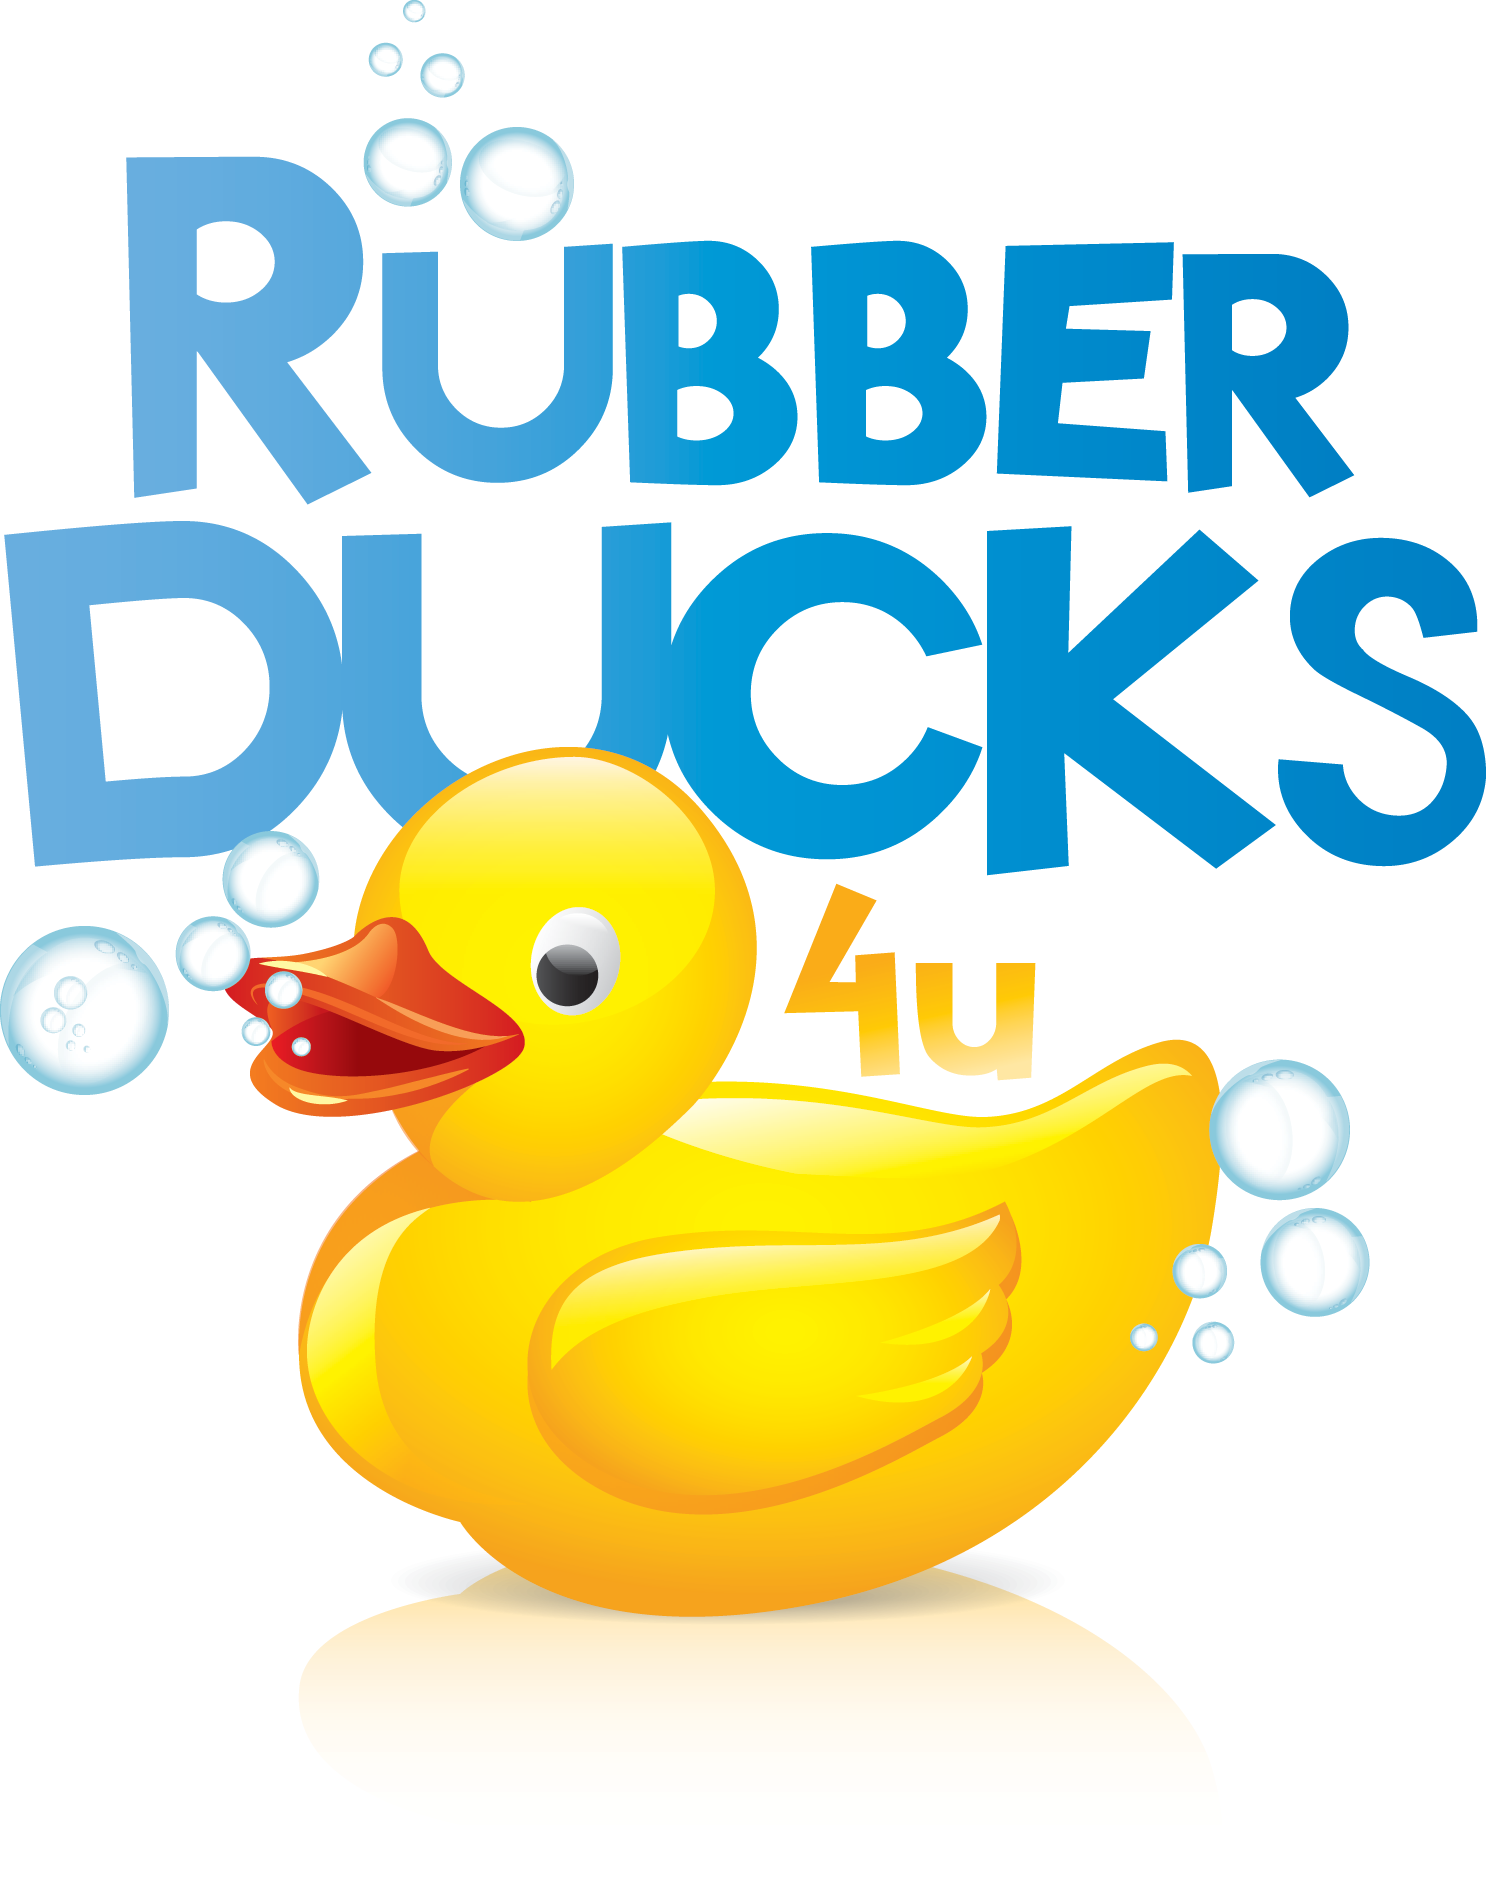 Rubber Ducks 4 U